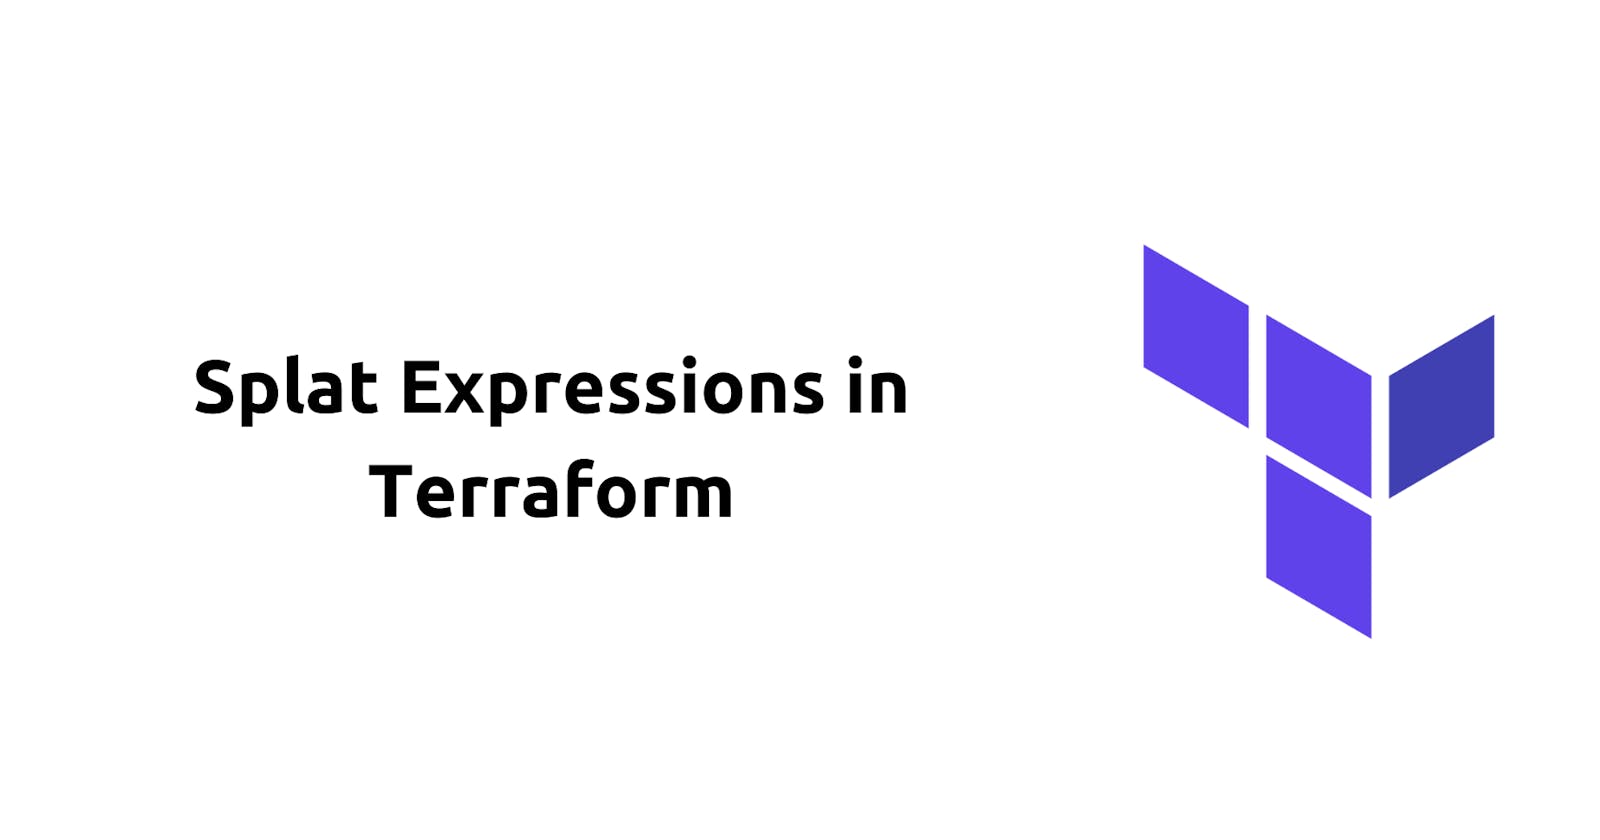 Splat Expressions in Terraform